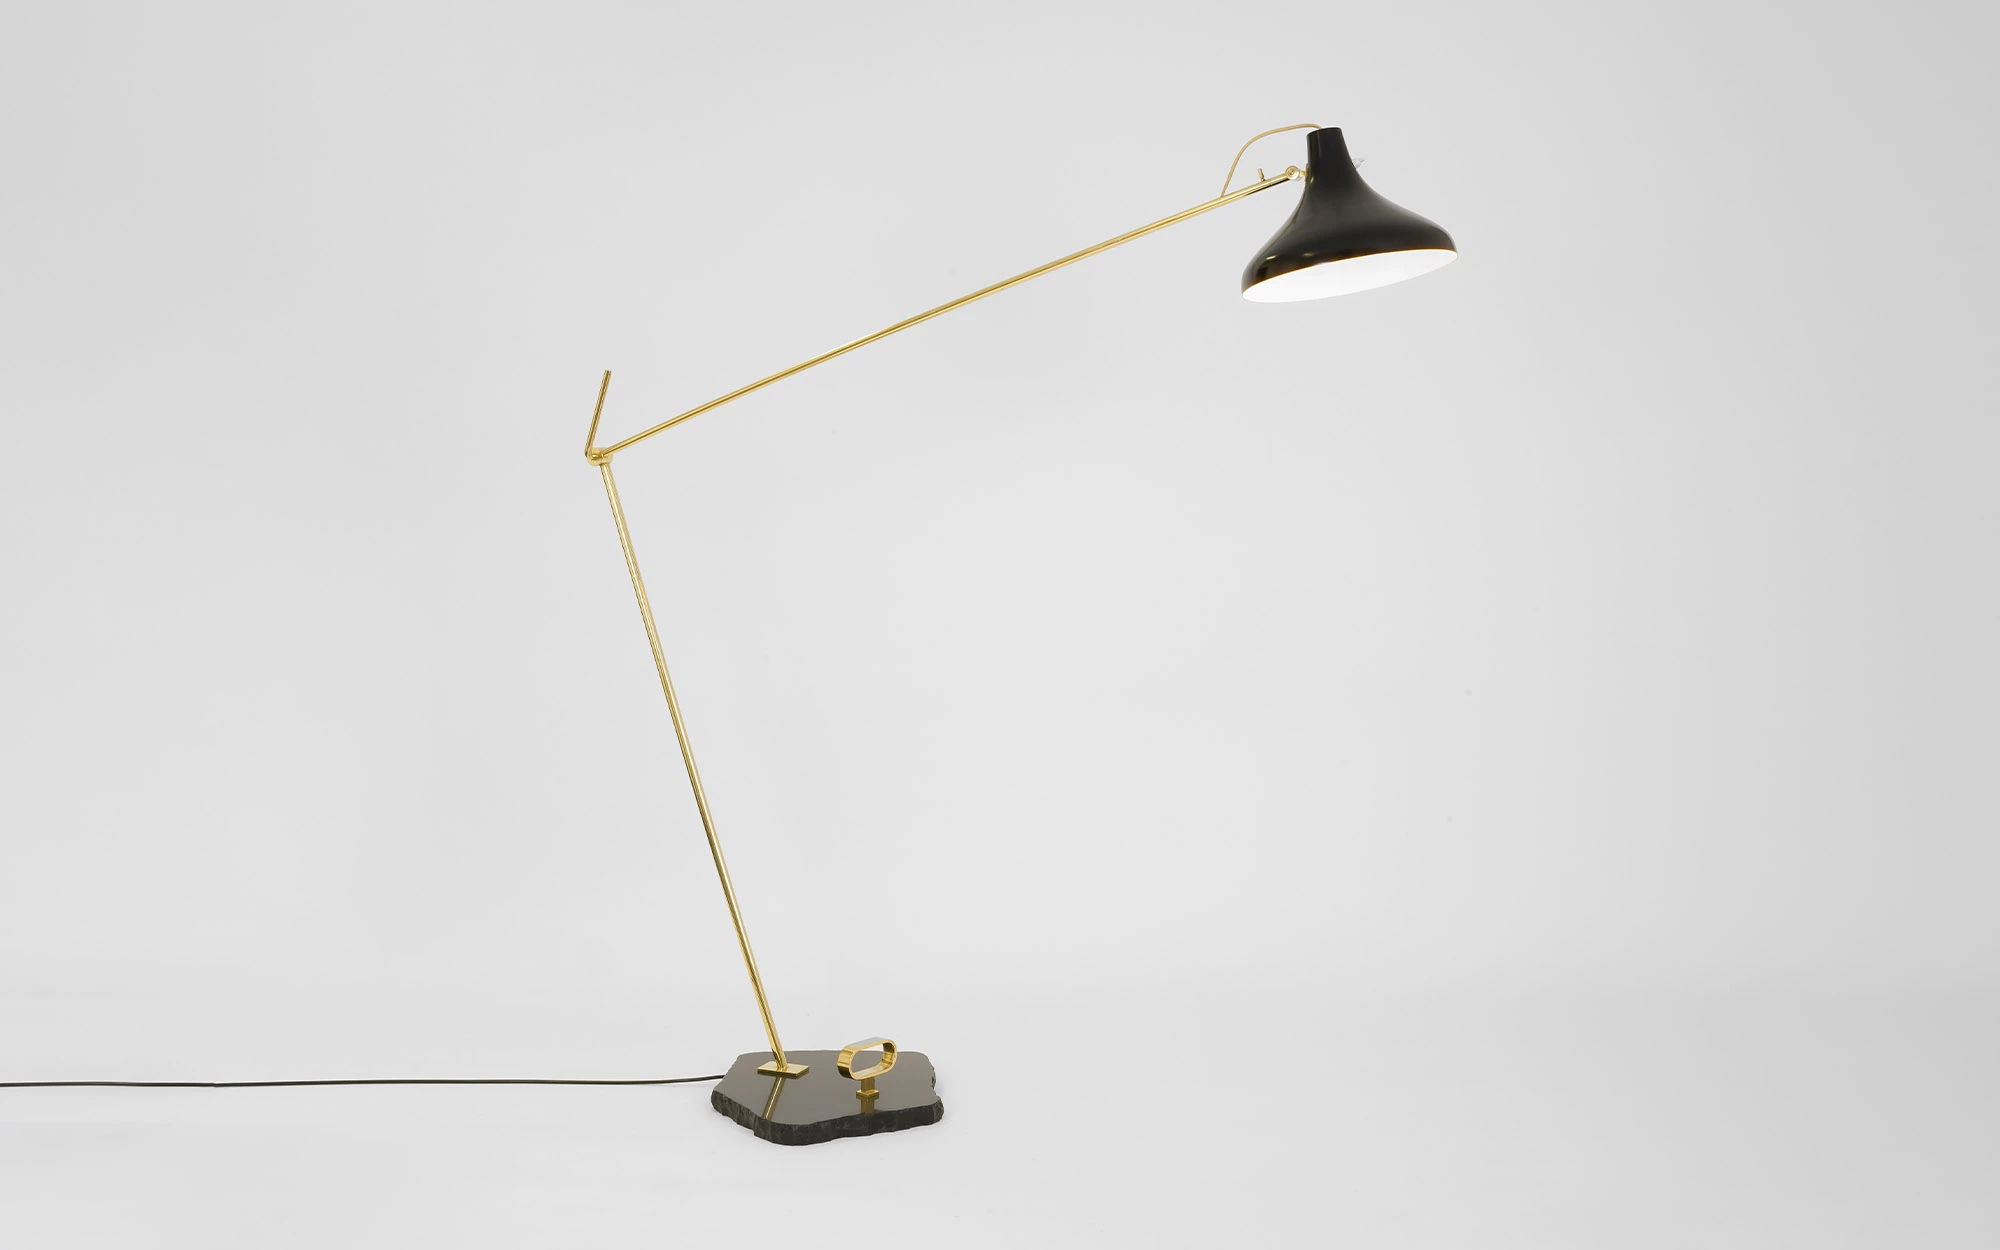 1033a - Gino Sarfatti - Pendant light - Galerie kreo